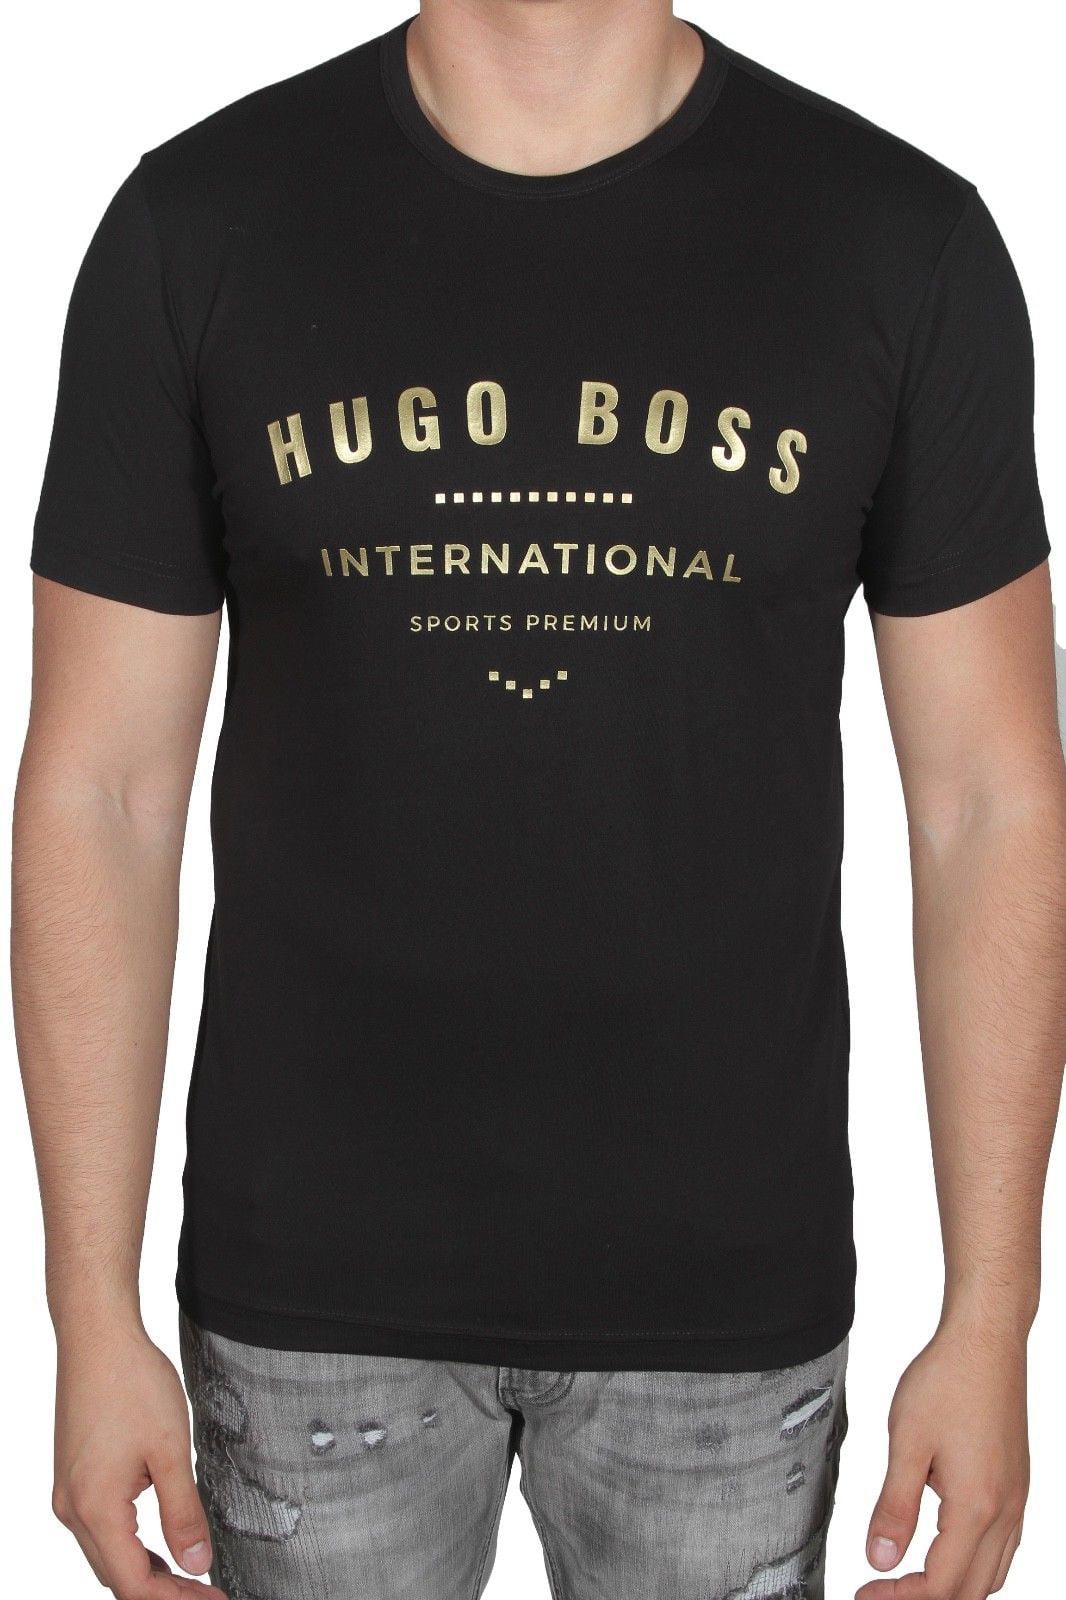 boss brand t shirts price